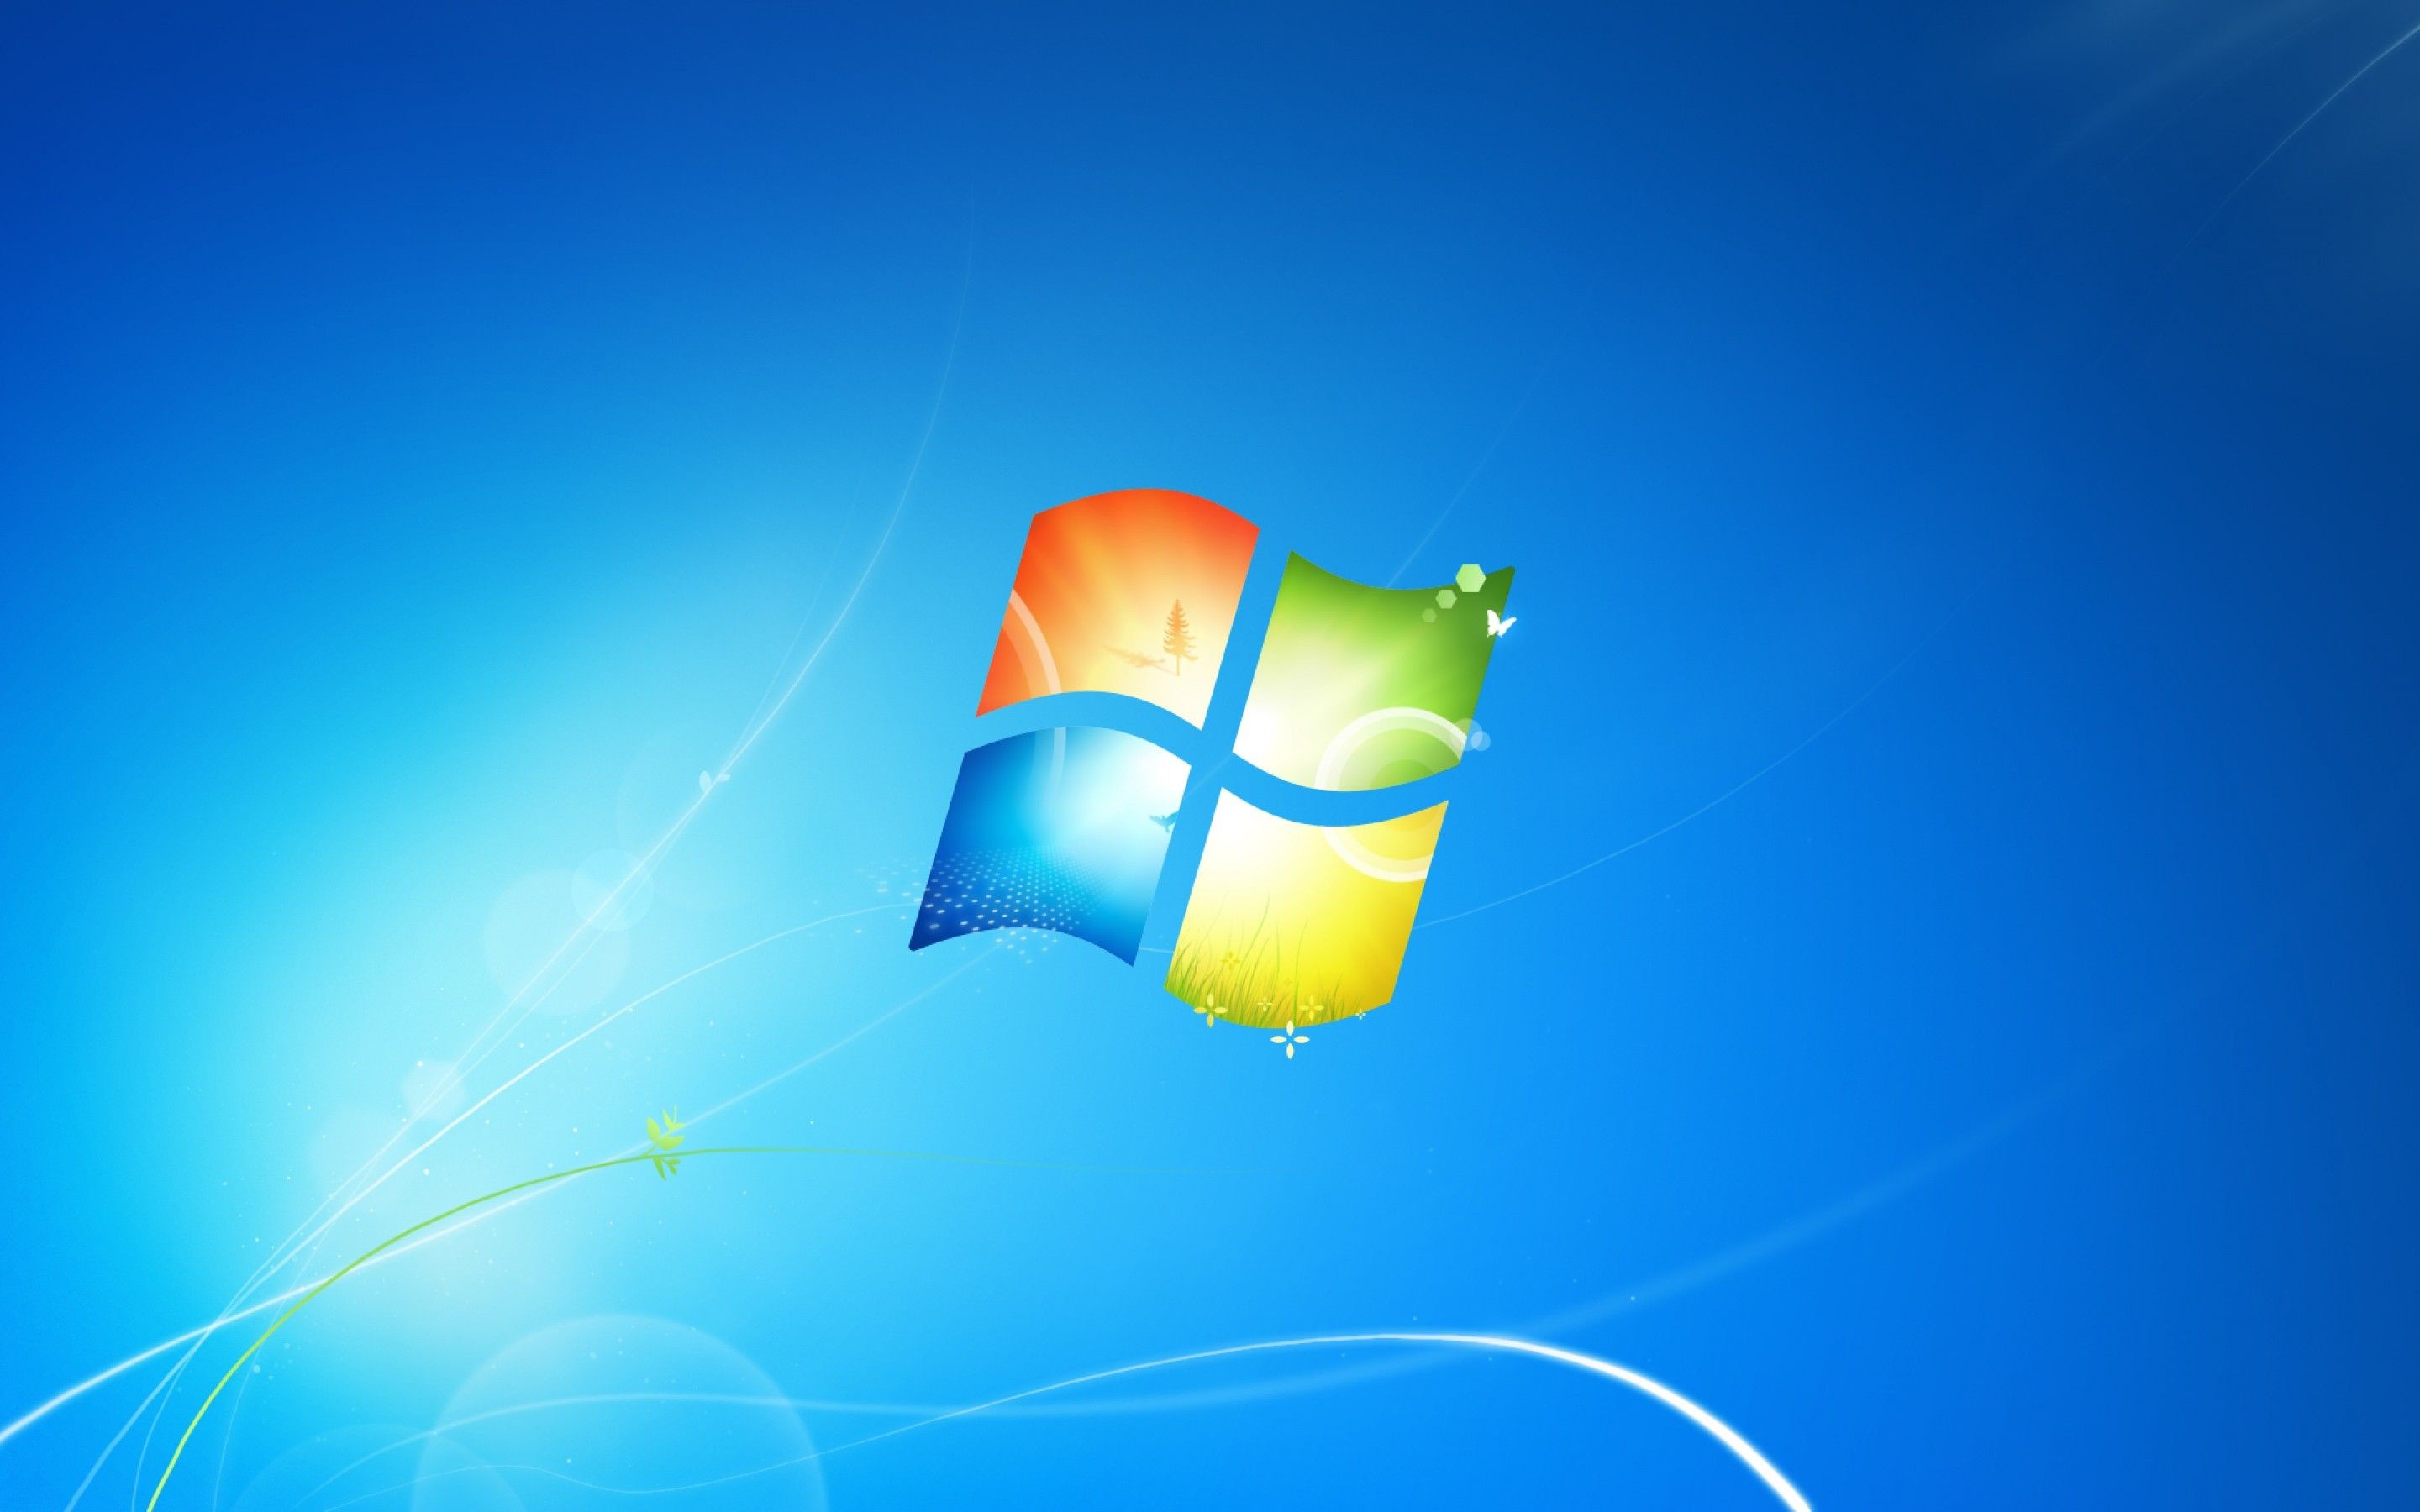 Microsoft Windows Desktop Background Image